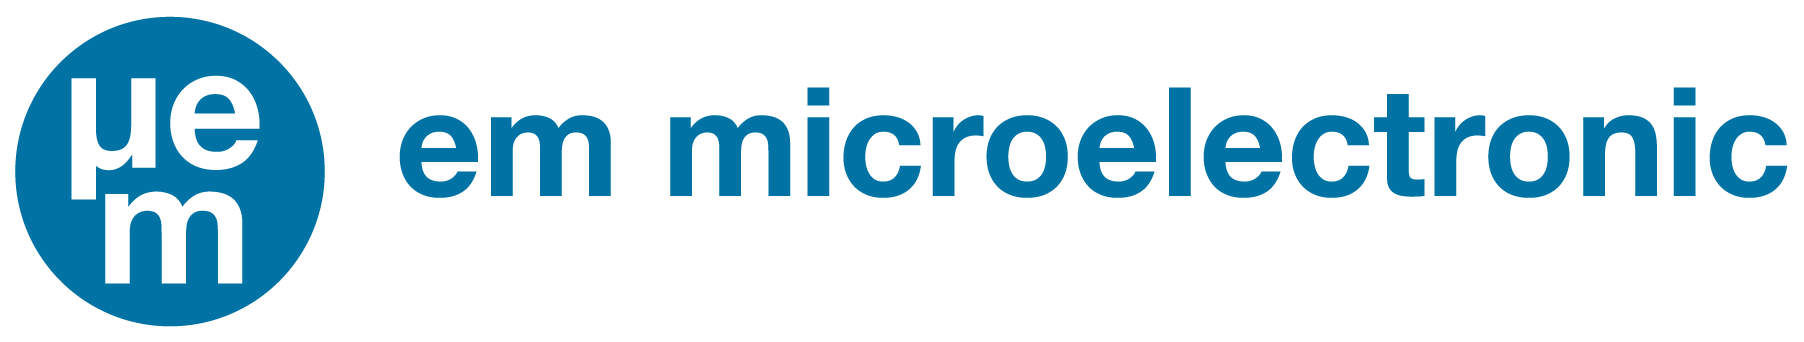 EM-Microelectronic logo